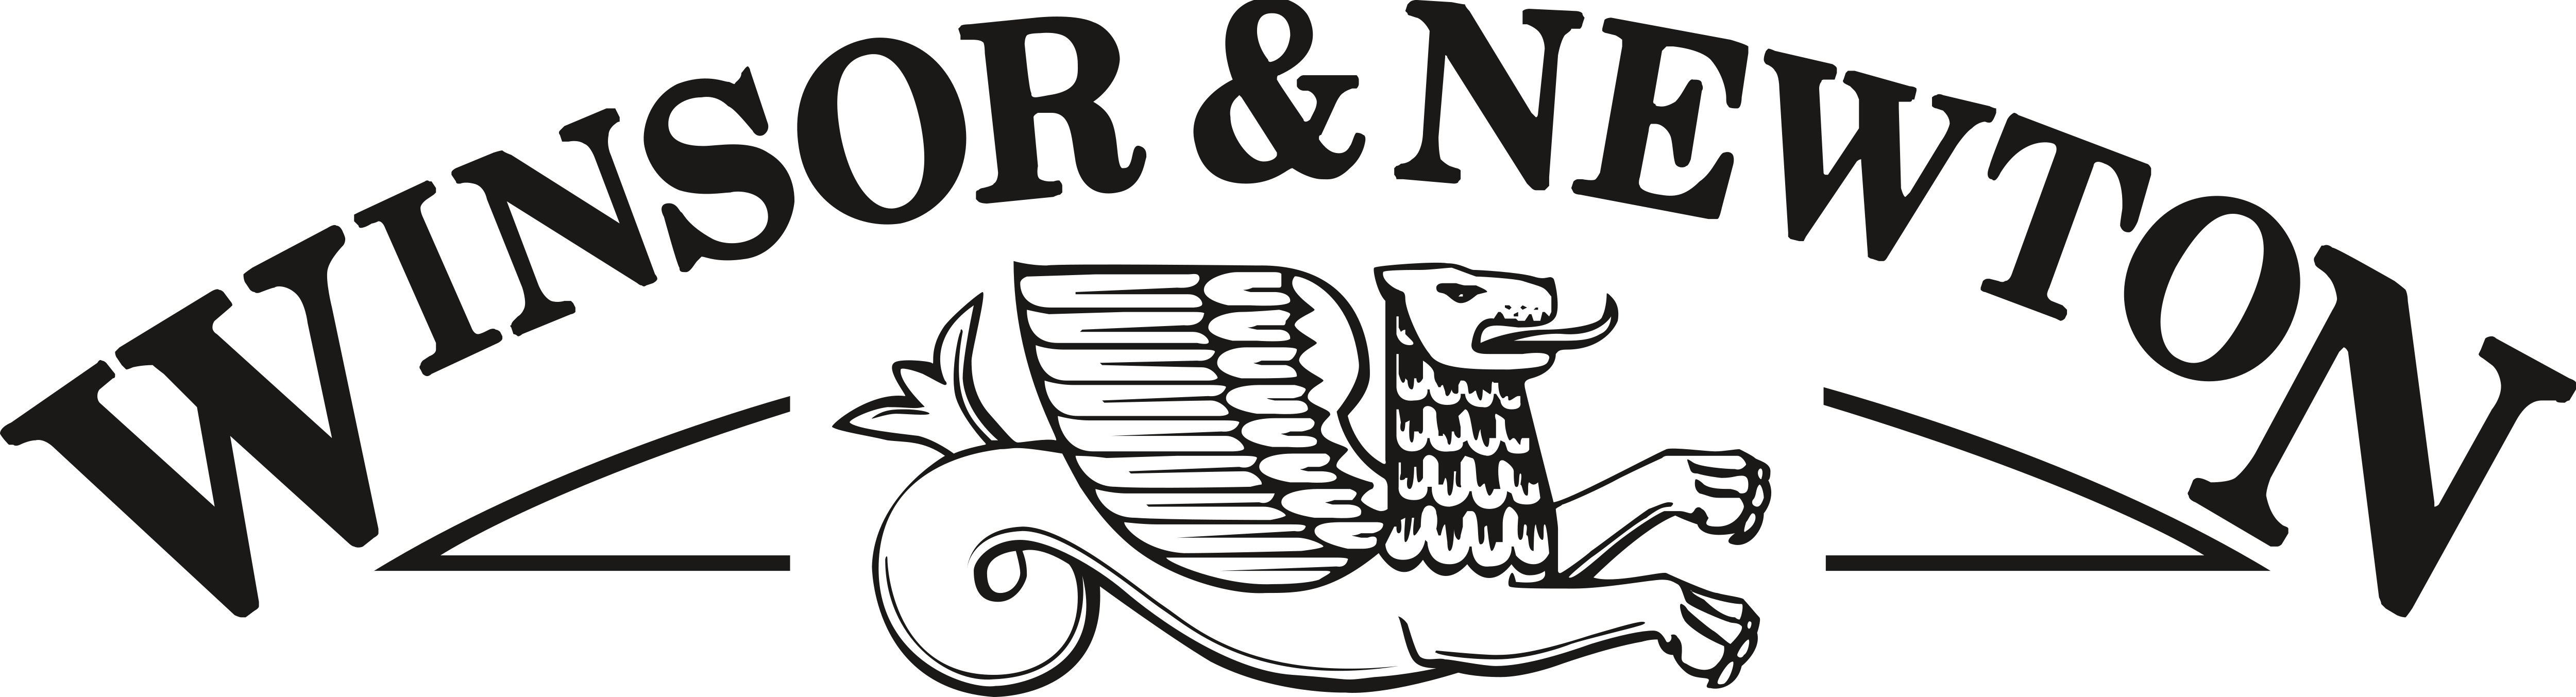 Winsor Newton Logo old